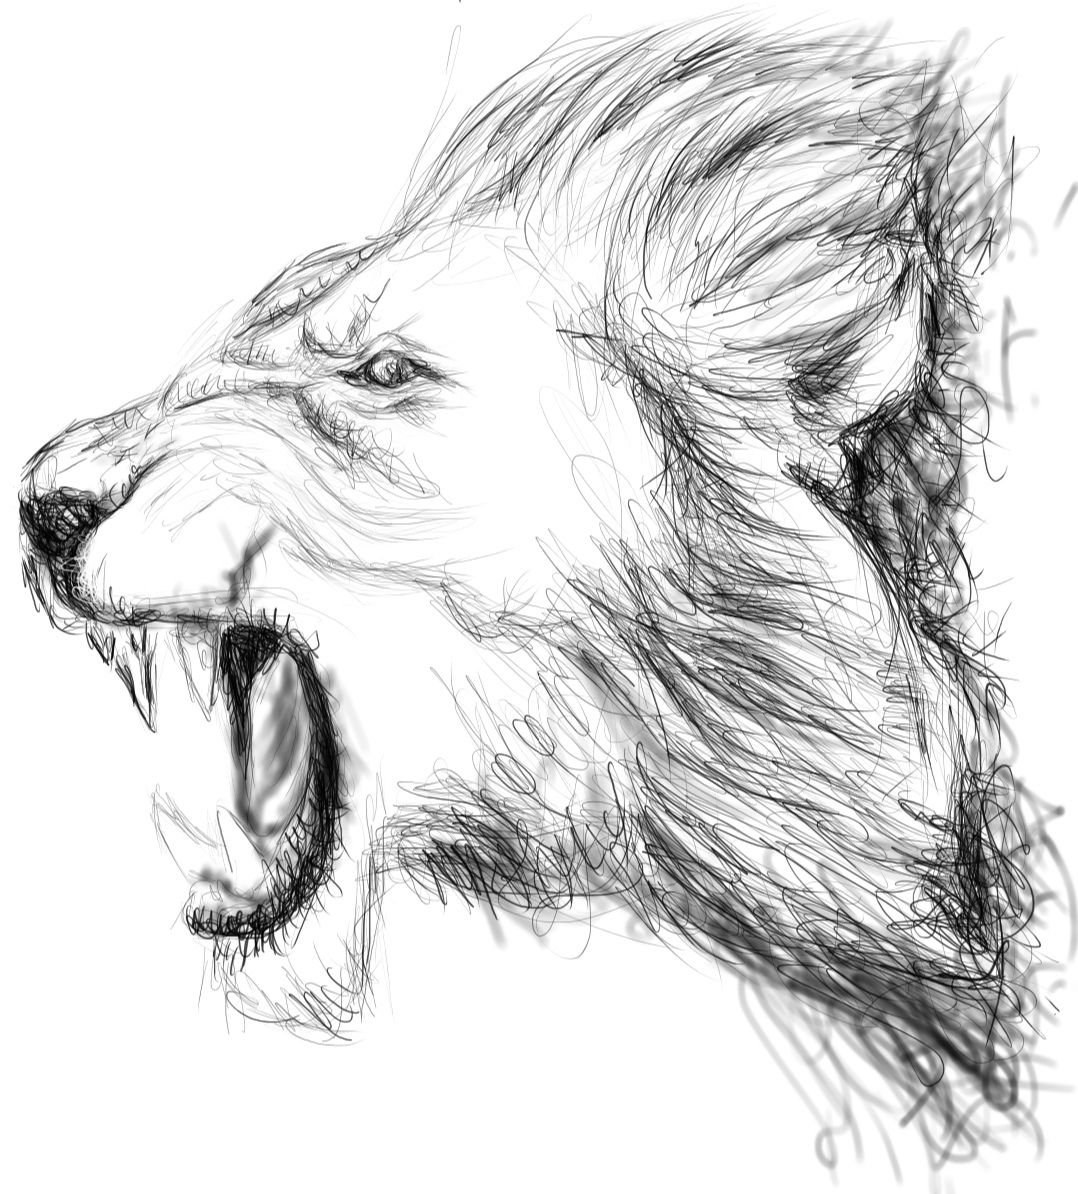 Roar (a sketchbook page) : r/drawing